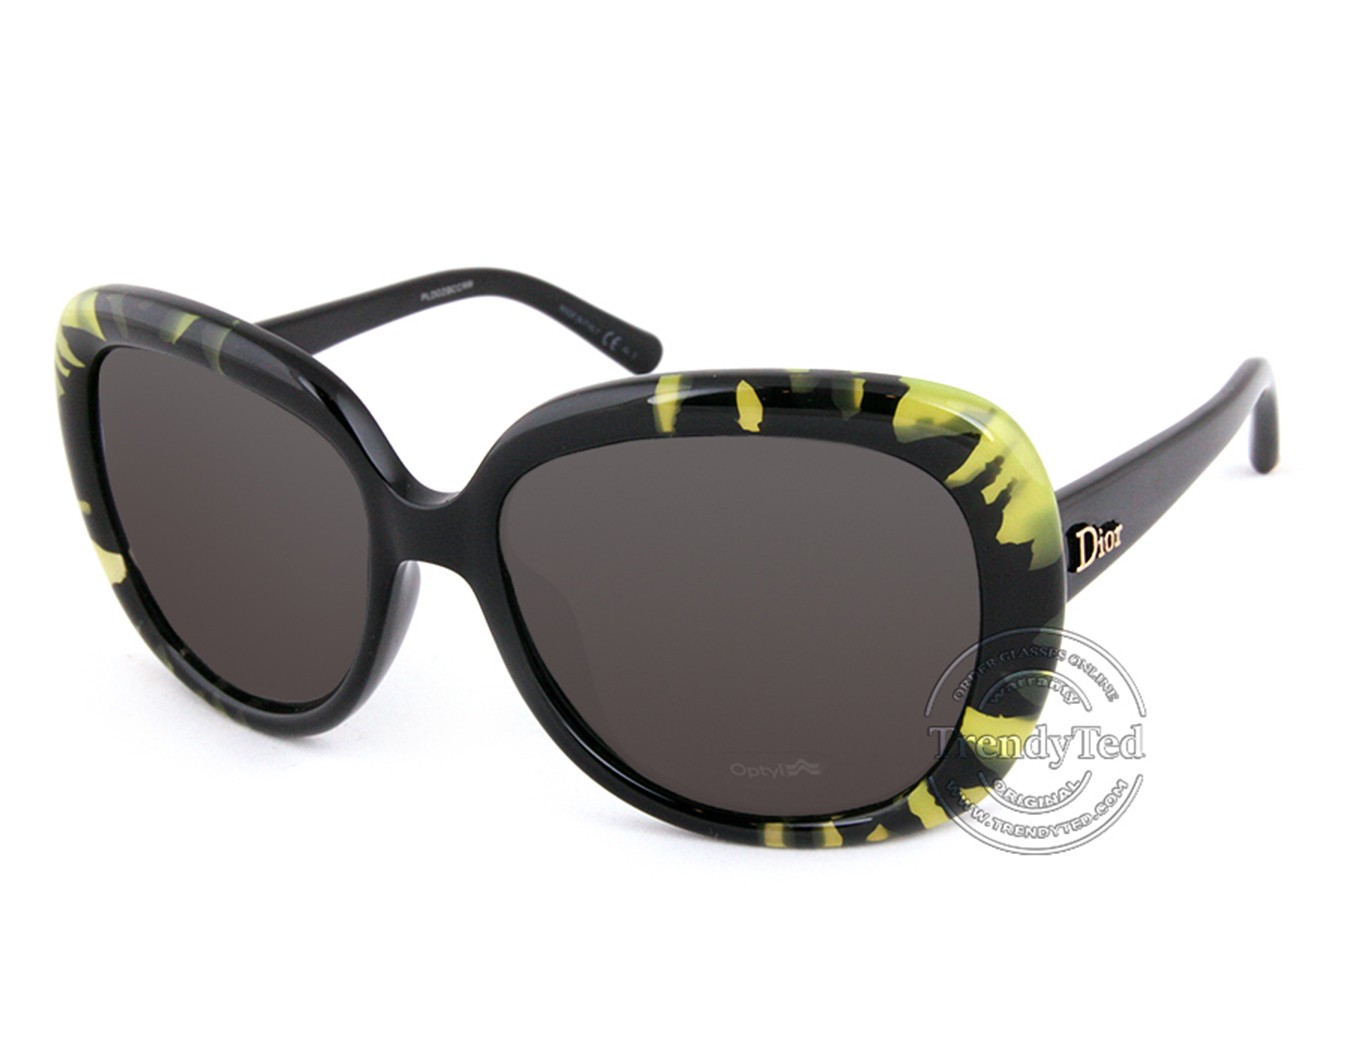 Dior sunglasses model EEWNR on TrendyTed